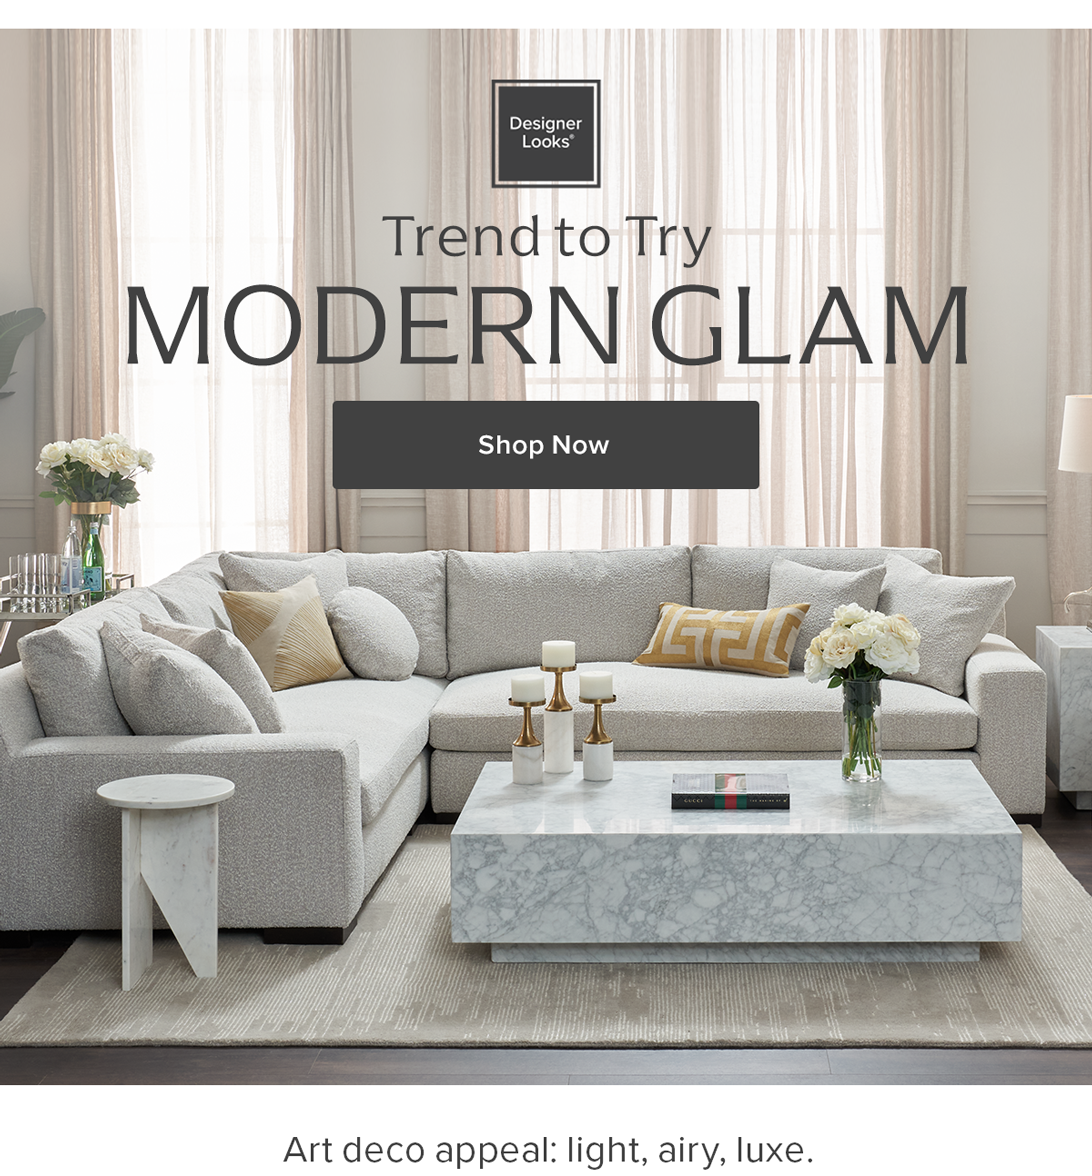 Modern Glam